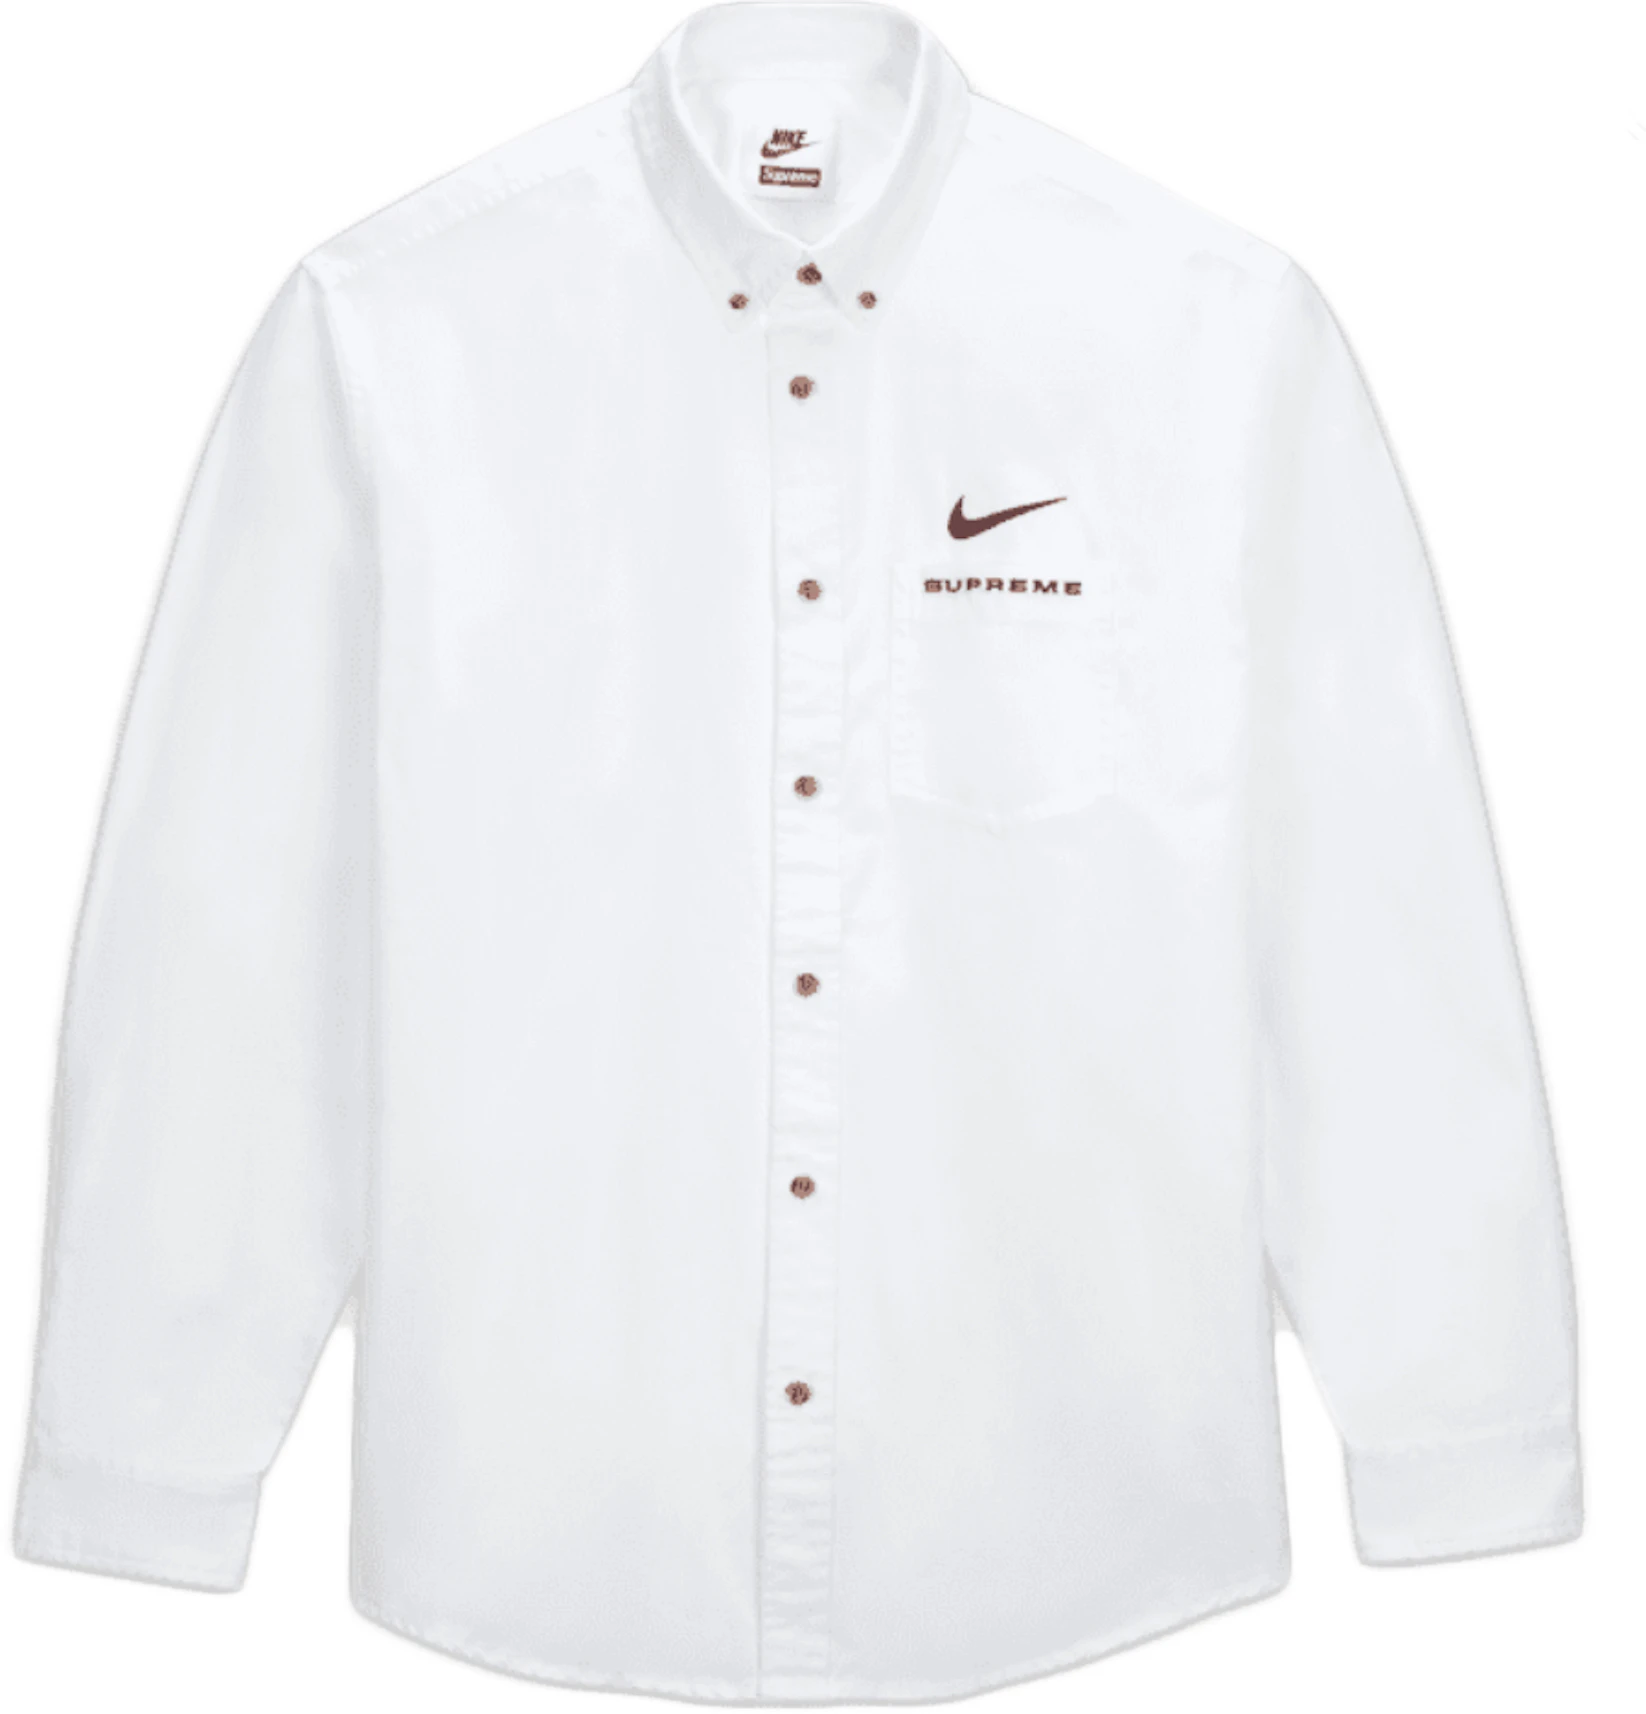 Supreme®/Nike® Cotton Twill Shirt | labiela.com